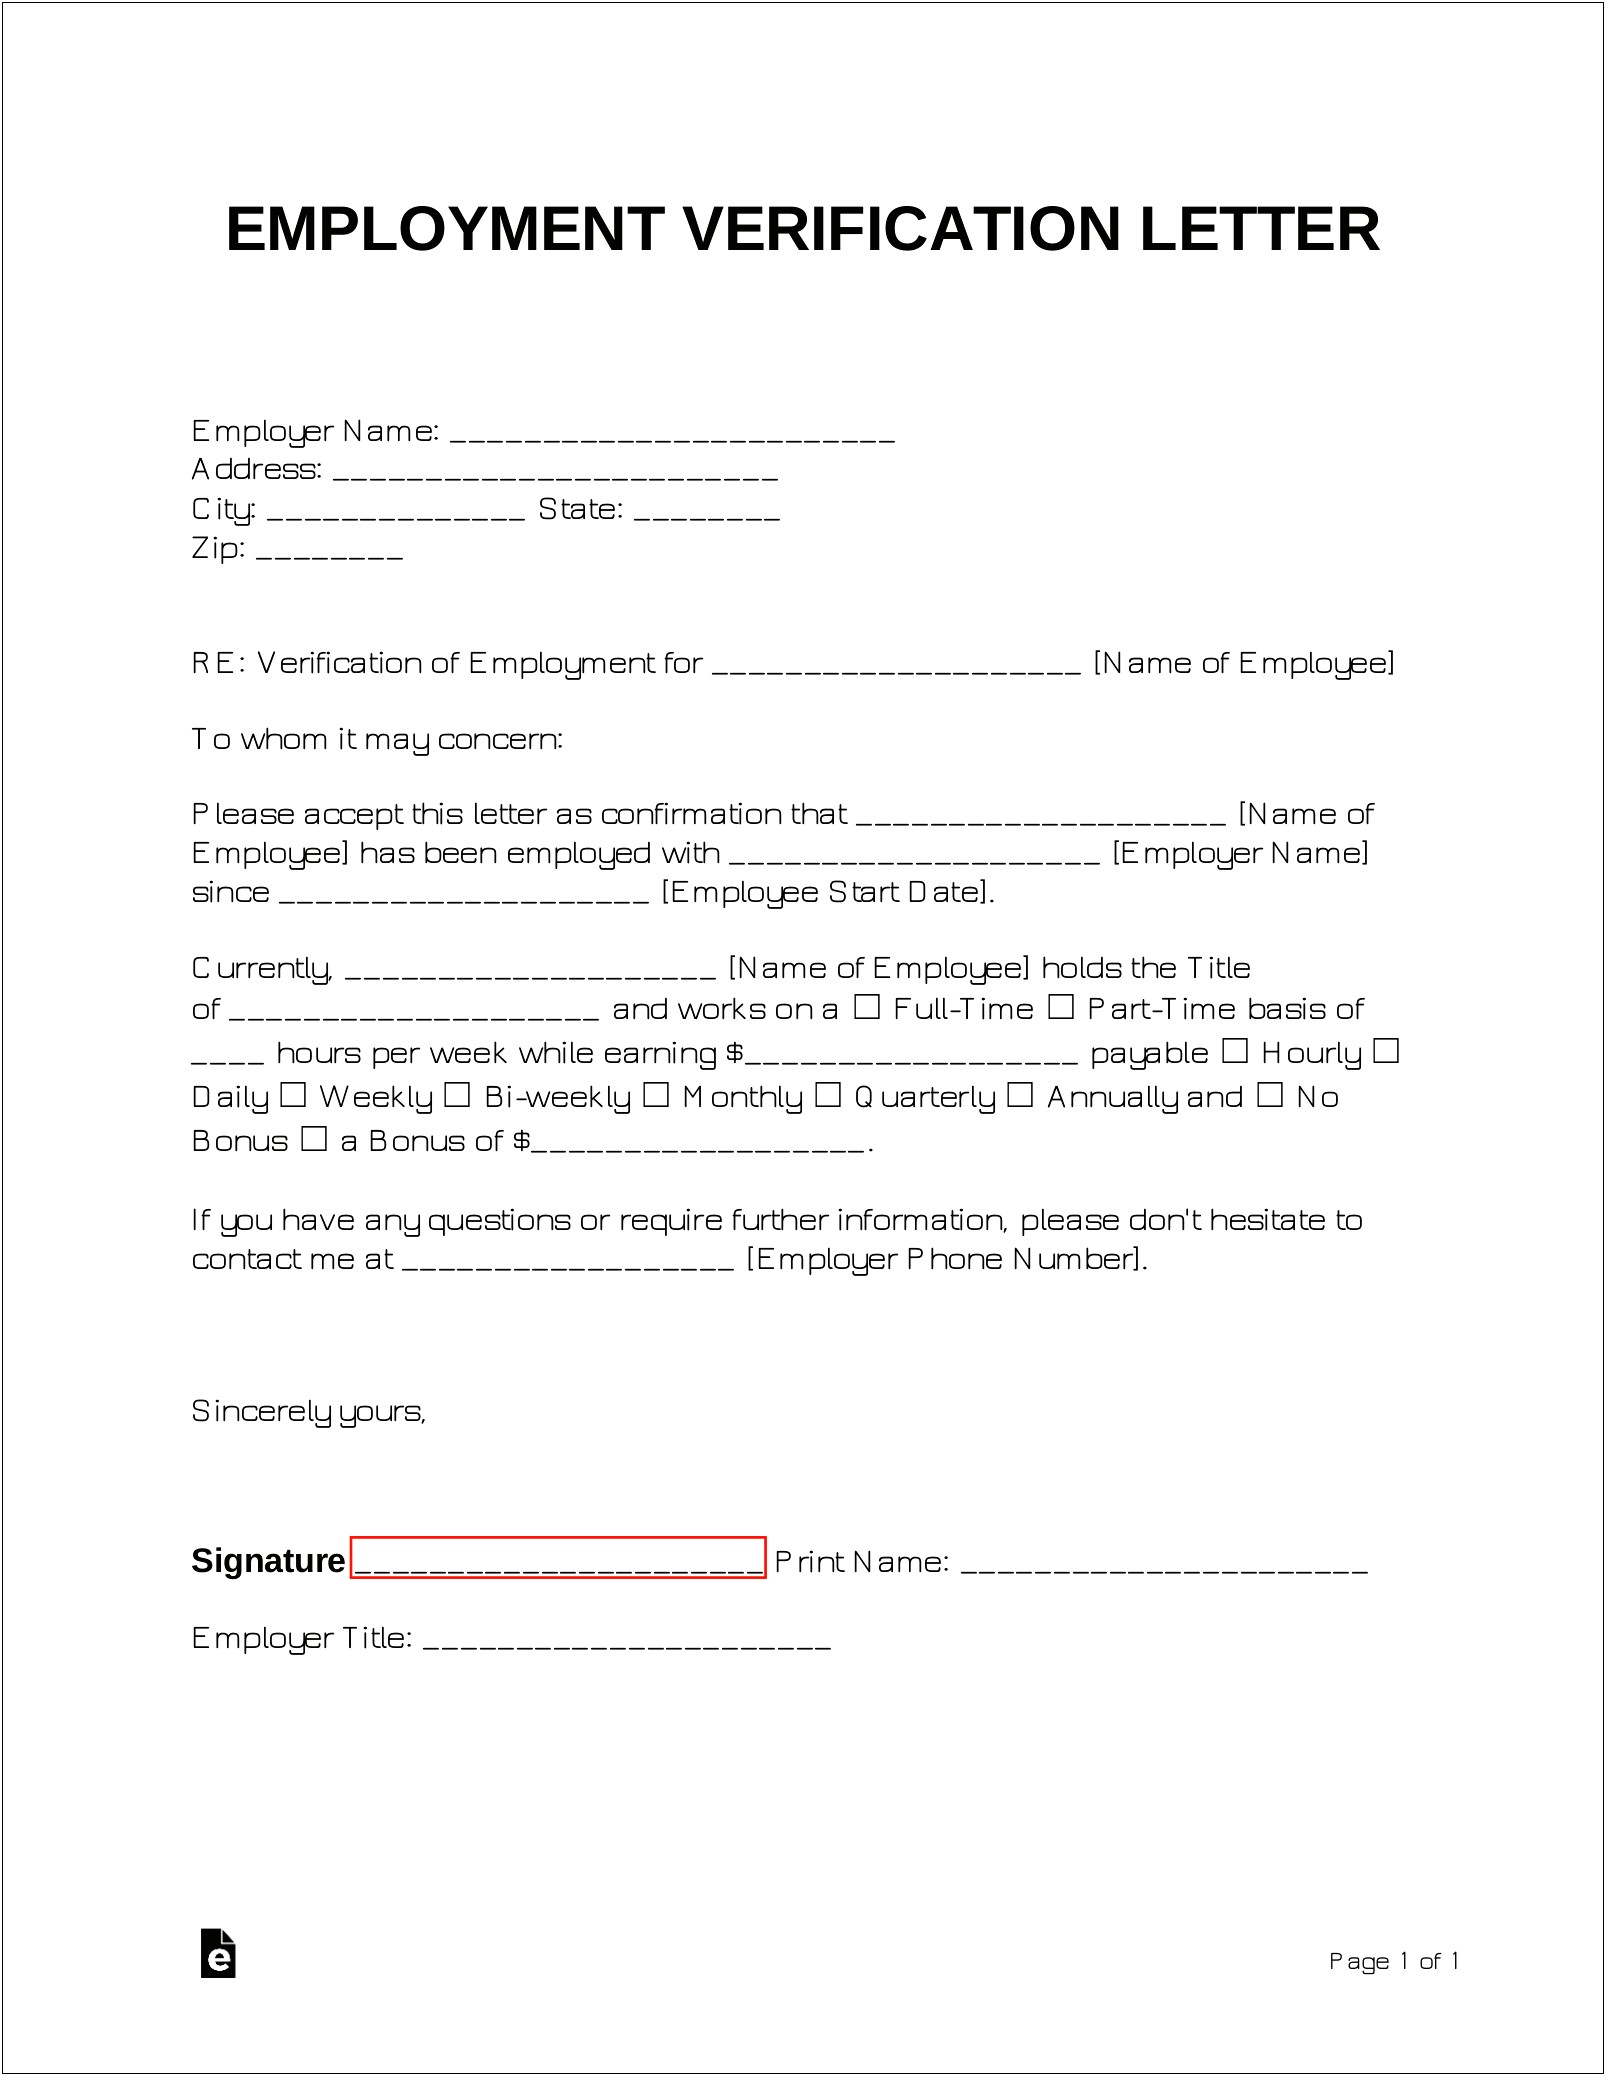 Microsoft Word Document Employment Verification Template